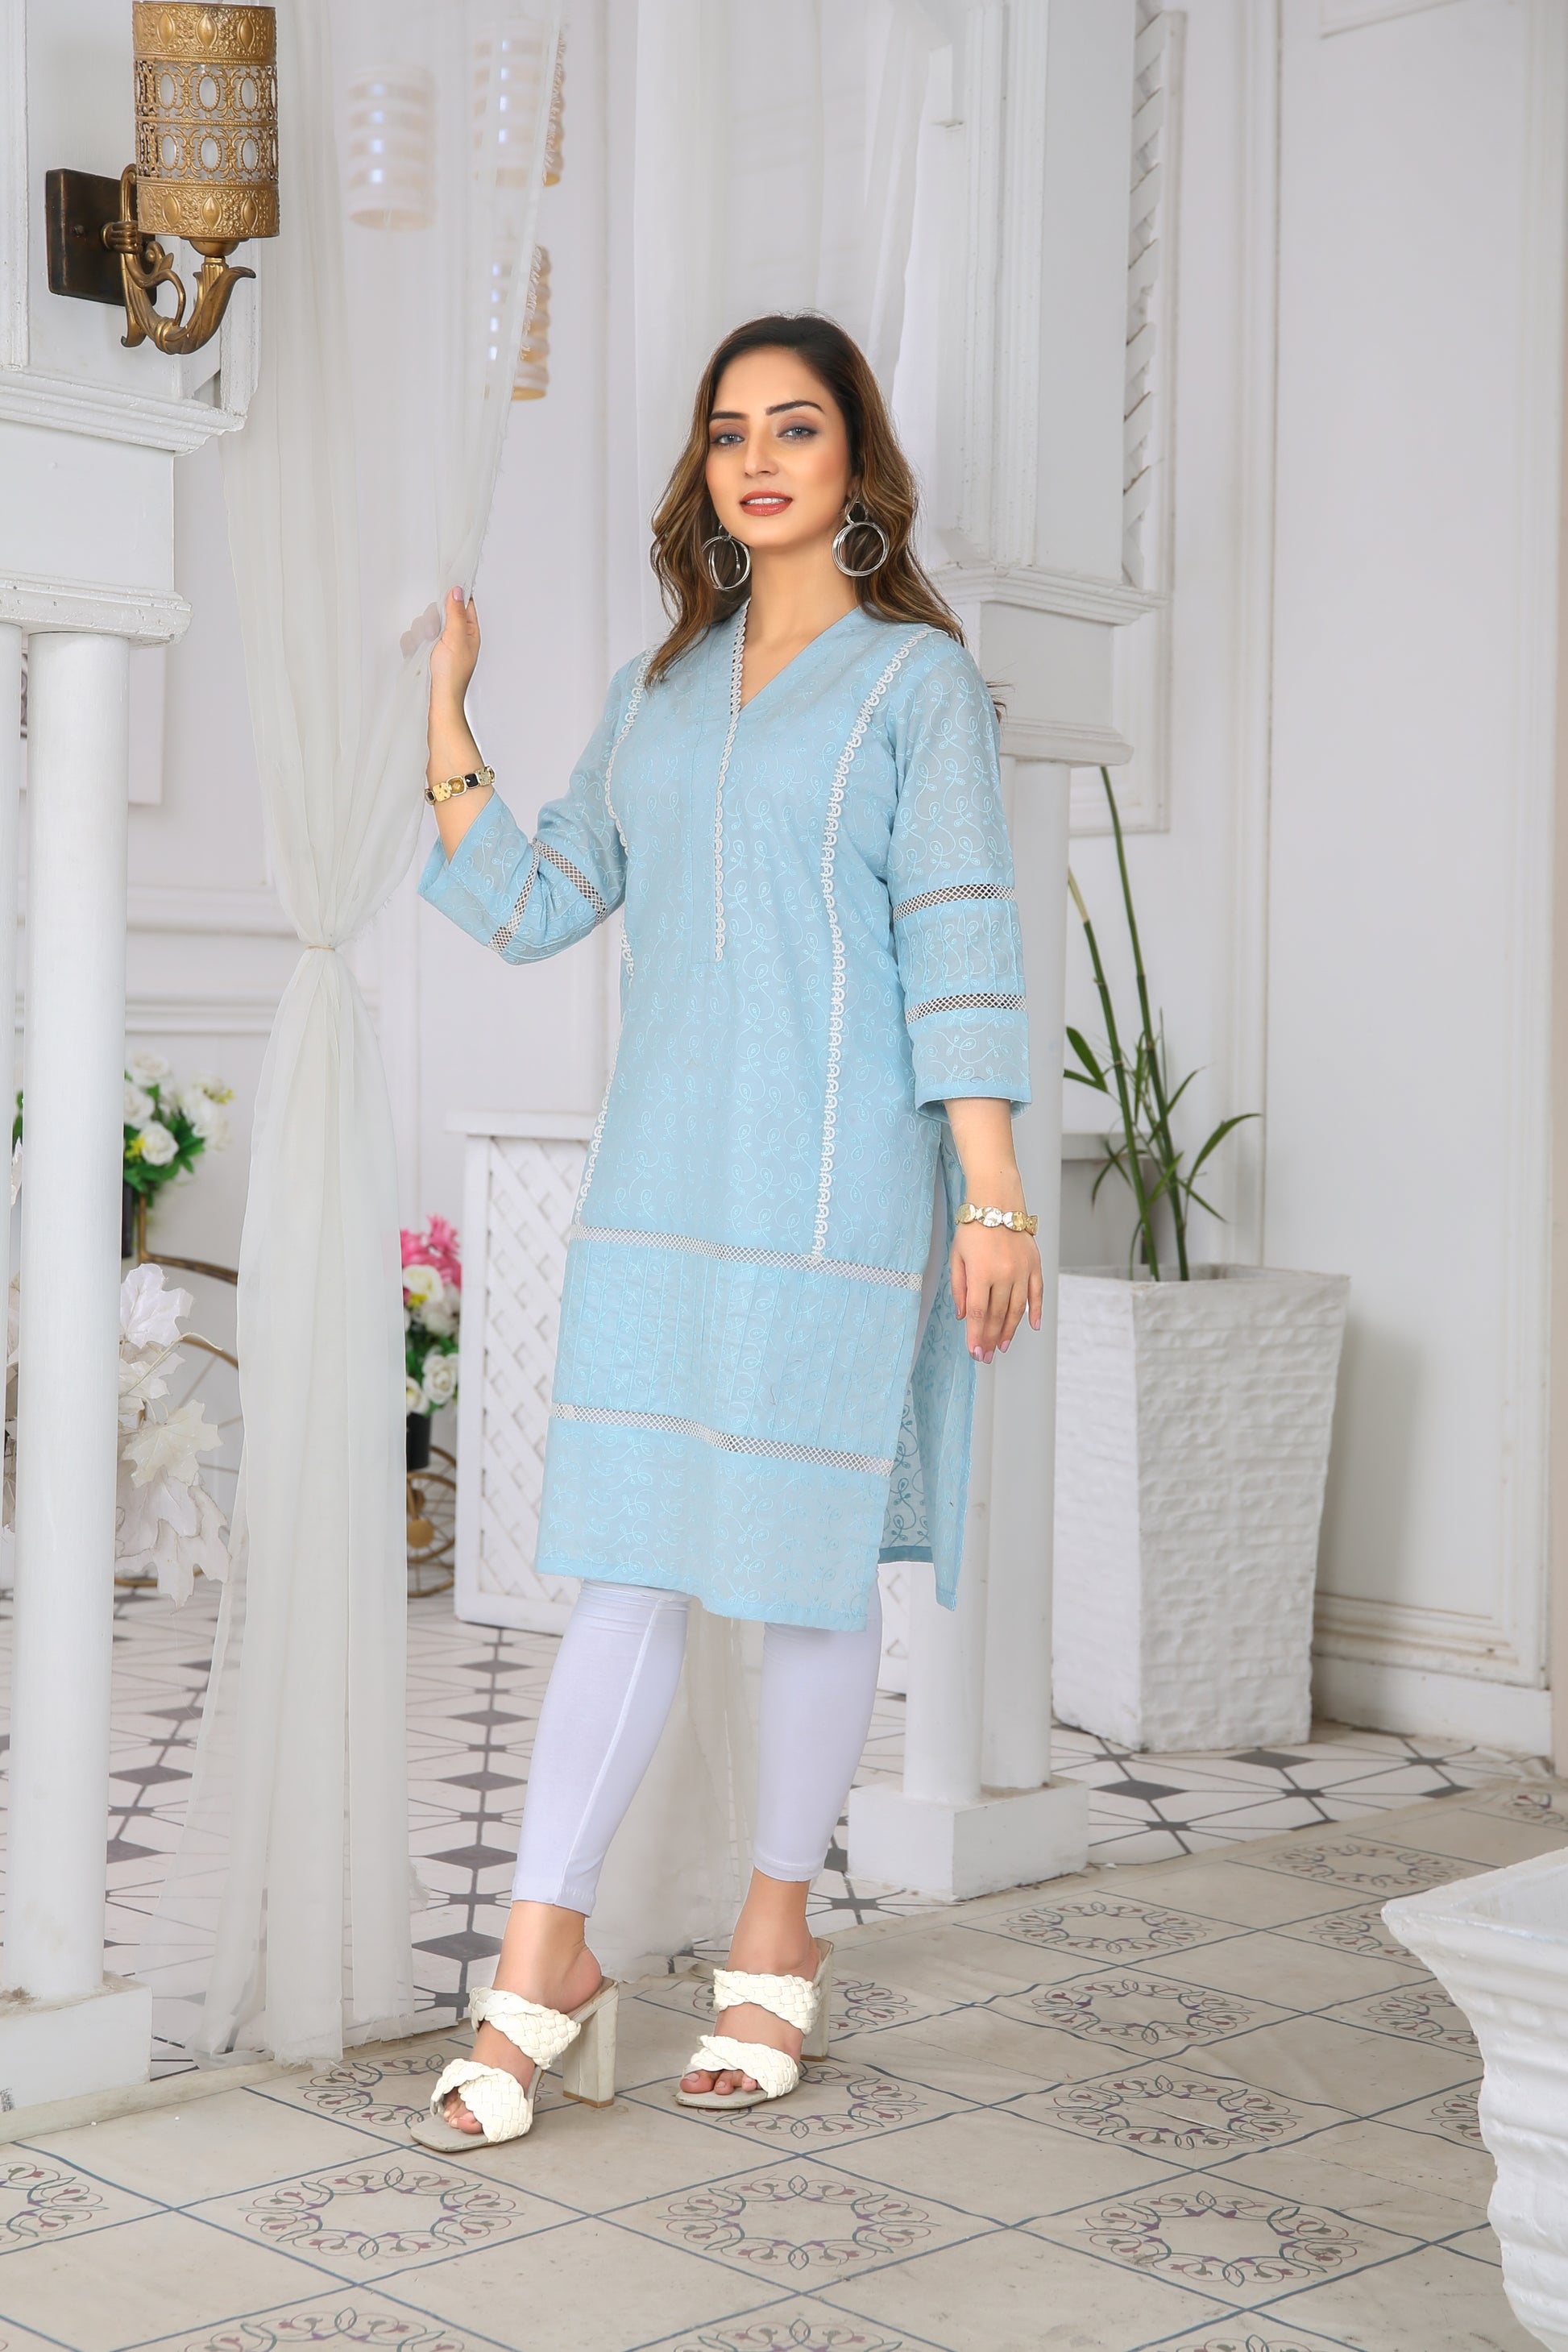 IshDeena Indian Chikankari Kurtis for Women Indian Pakistani Style Cotton Long Kurta Kameez Tunics Tops for Jeans & LeggingsV31SE0423S1ID1